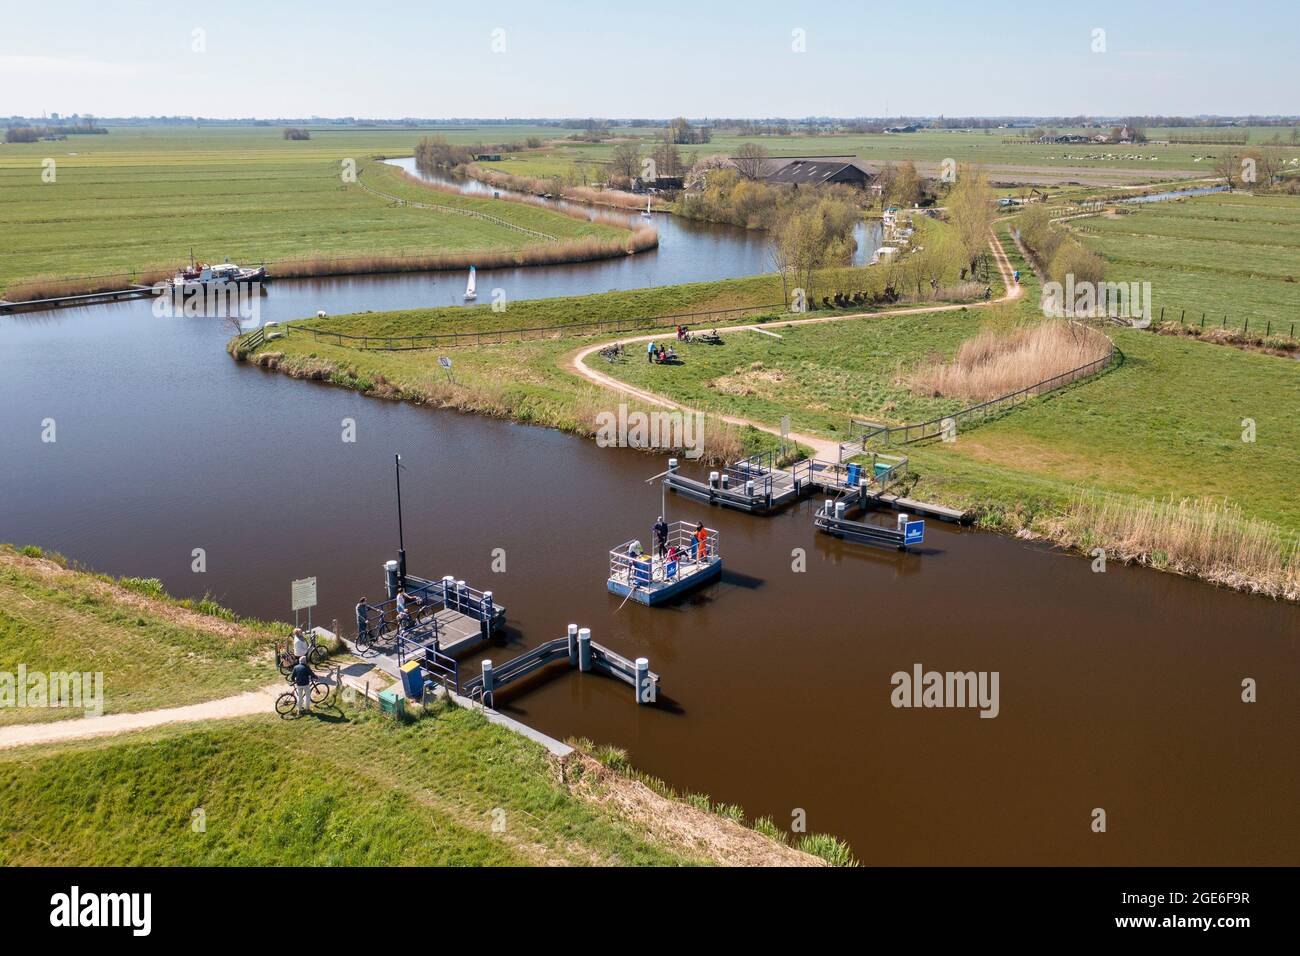 The Netherlands, Woerdense-Verlaat. Foot ferry crossing Drecht river. Human powered. Aerial. Stock Photo